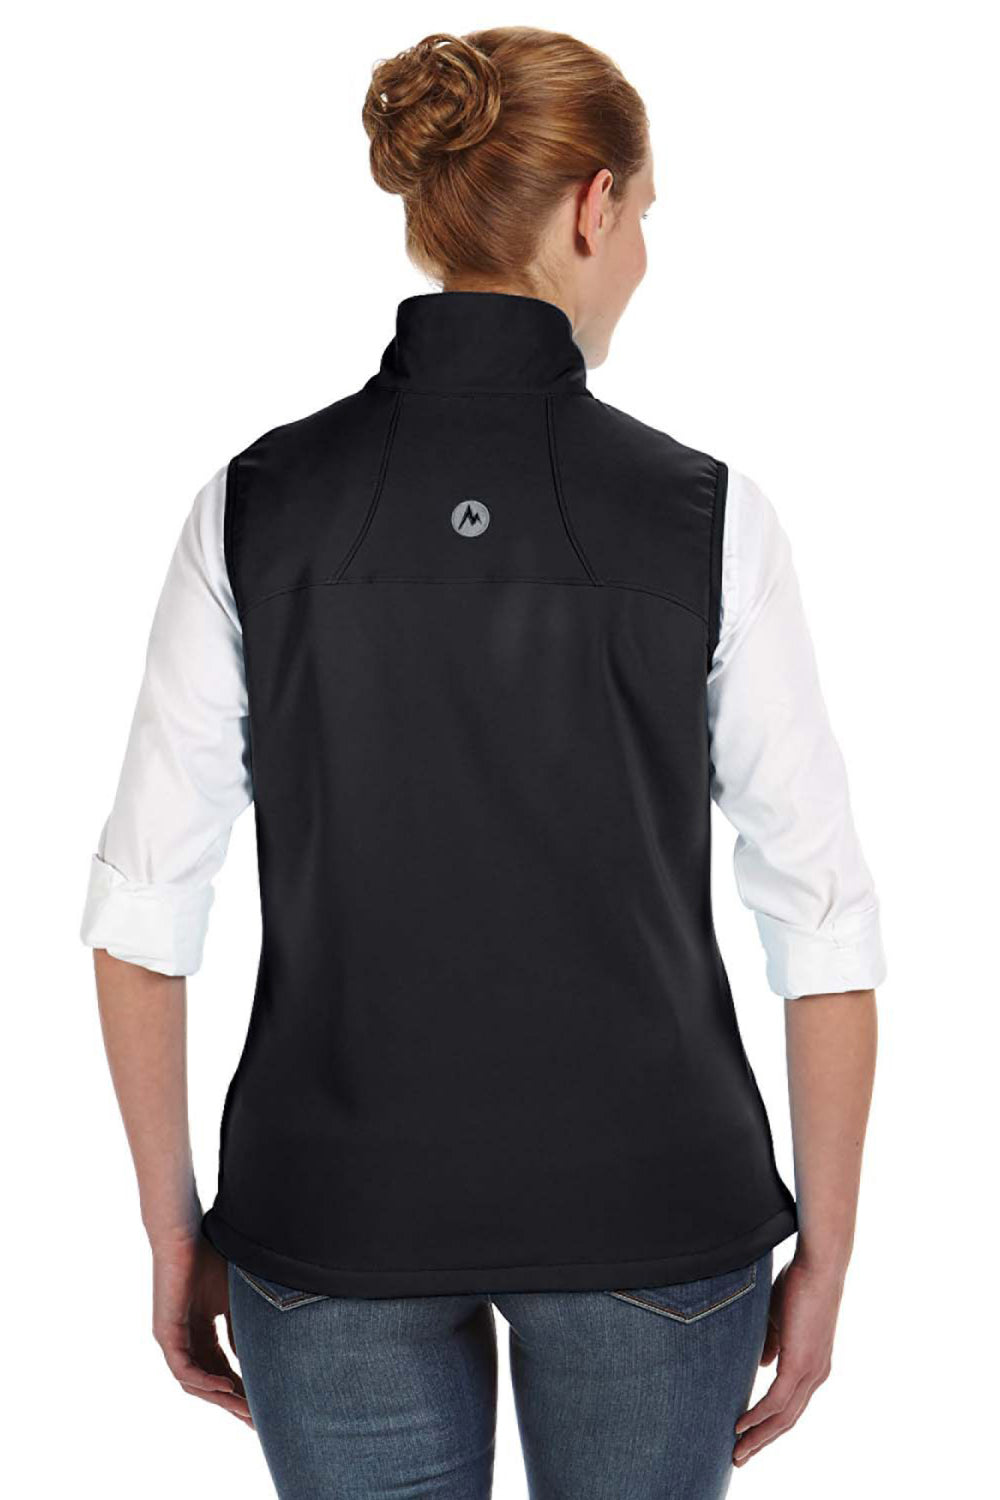 Marmot 98220 Womens Tempo Water Resistant Full Zip Vest Black Back